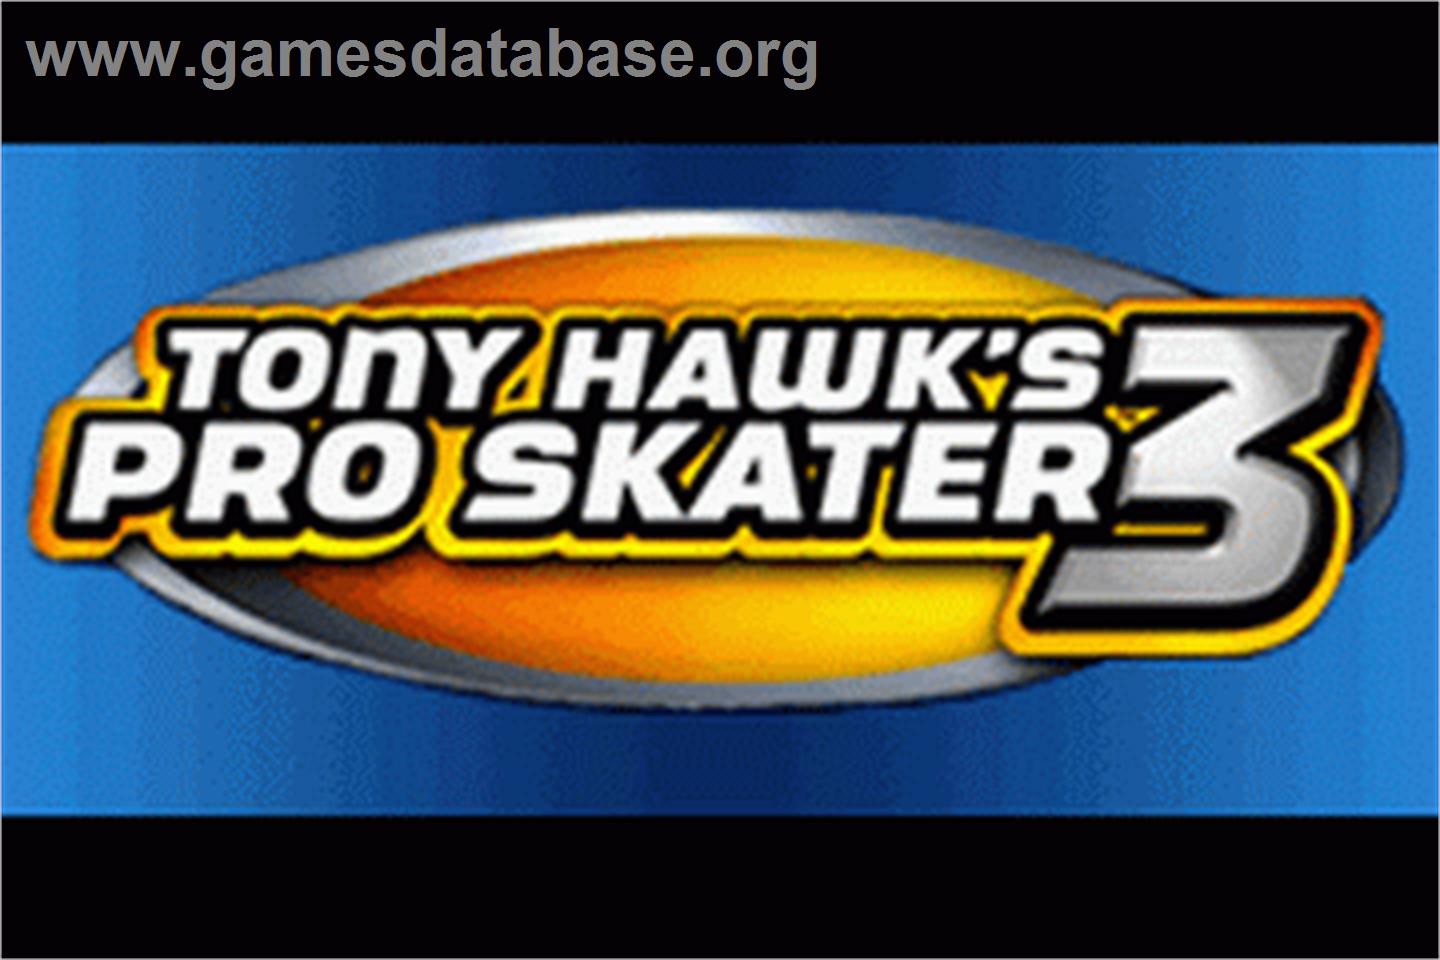 Tony Hawk's Pro Skater 3 - Nintendo Game Boy Advance - Artwork - Title Screen